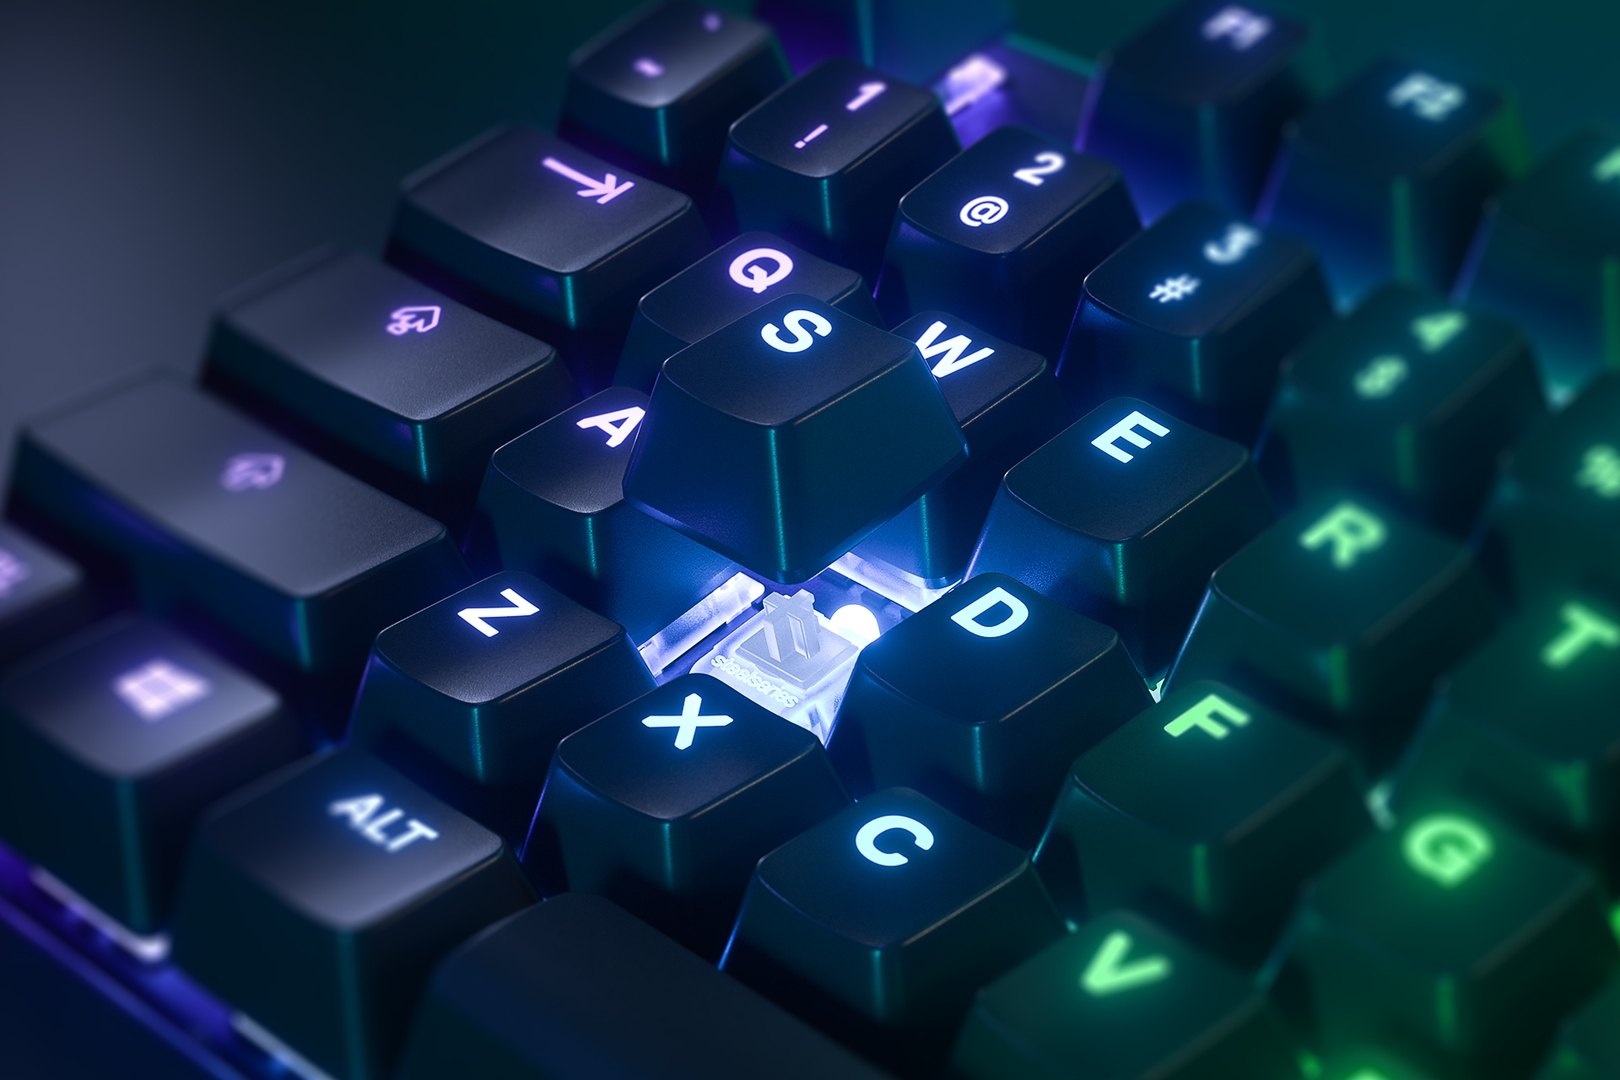 SteelSeries Apex Pro Mini Gaming Keyboard Review